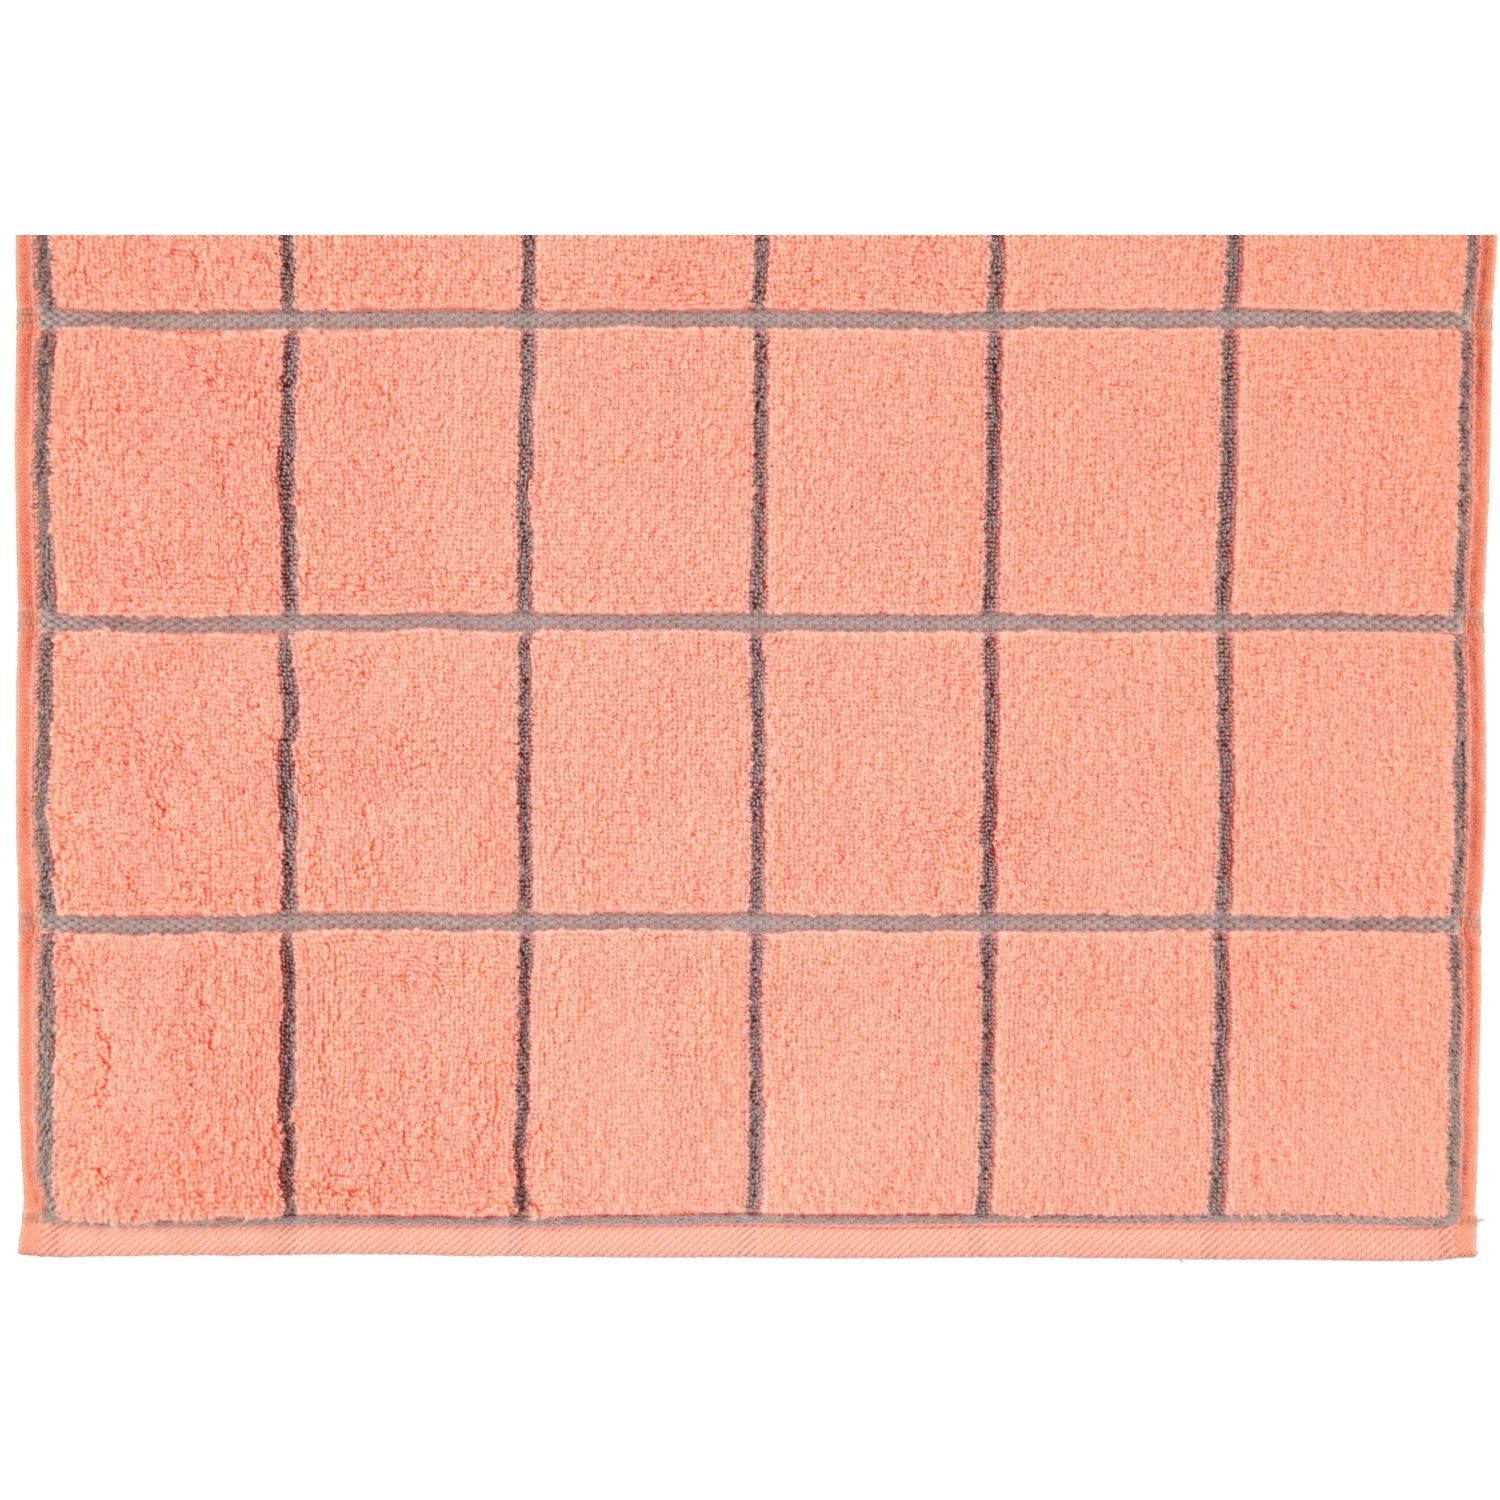 ROSS Handtücher Überkaro 9032, 100% peach Baumwolle pink